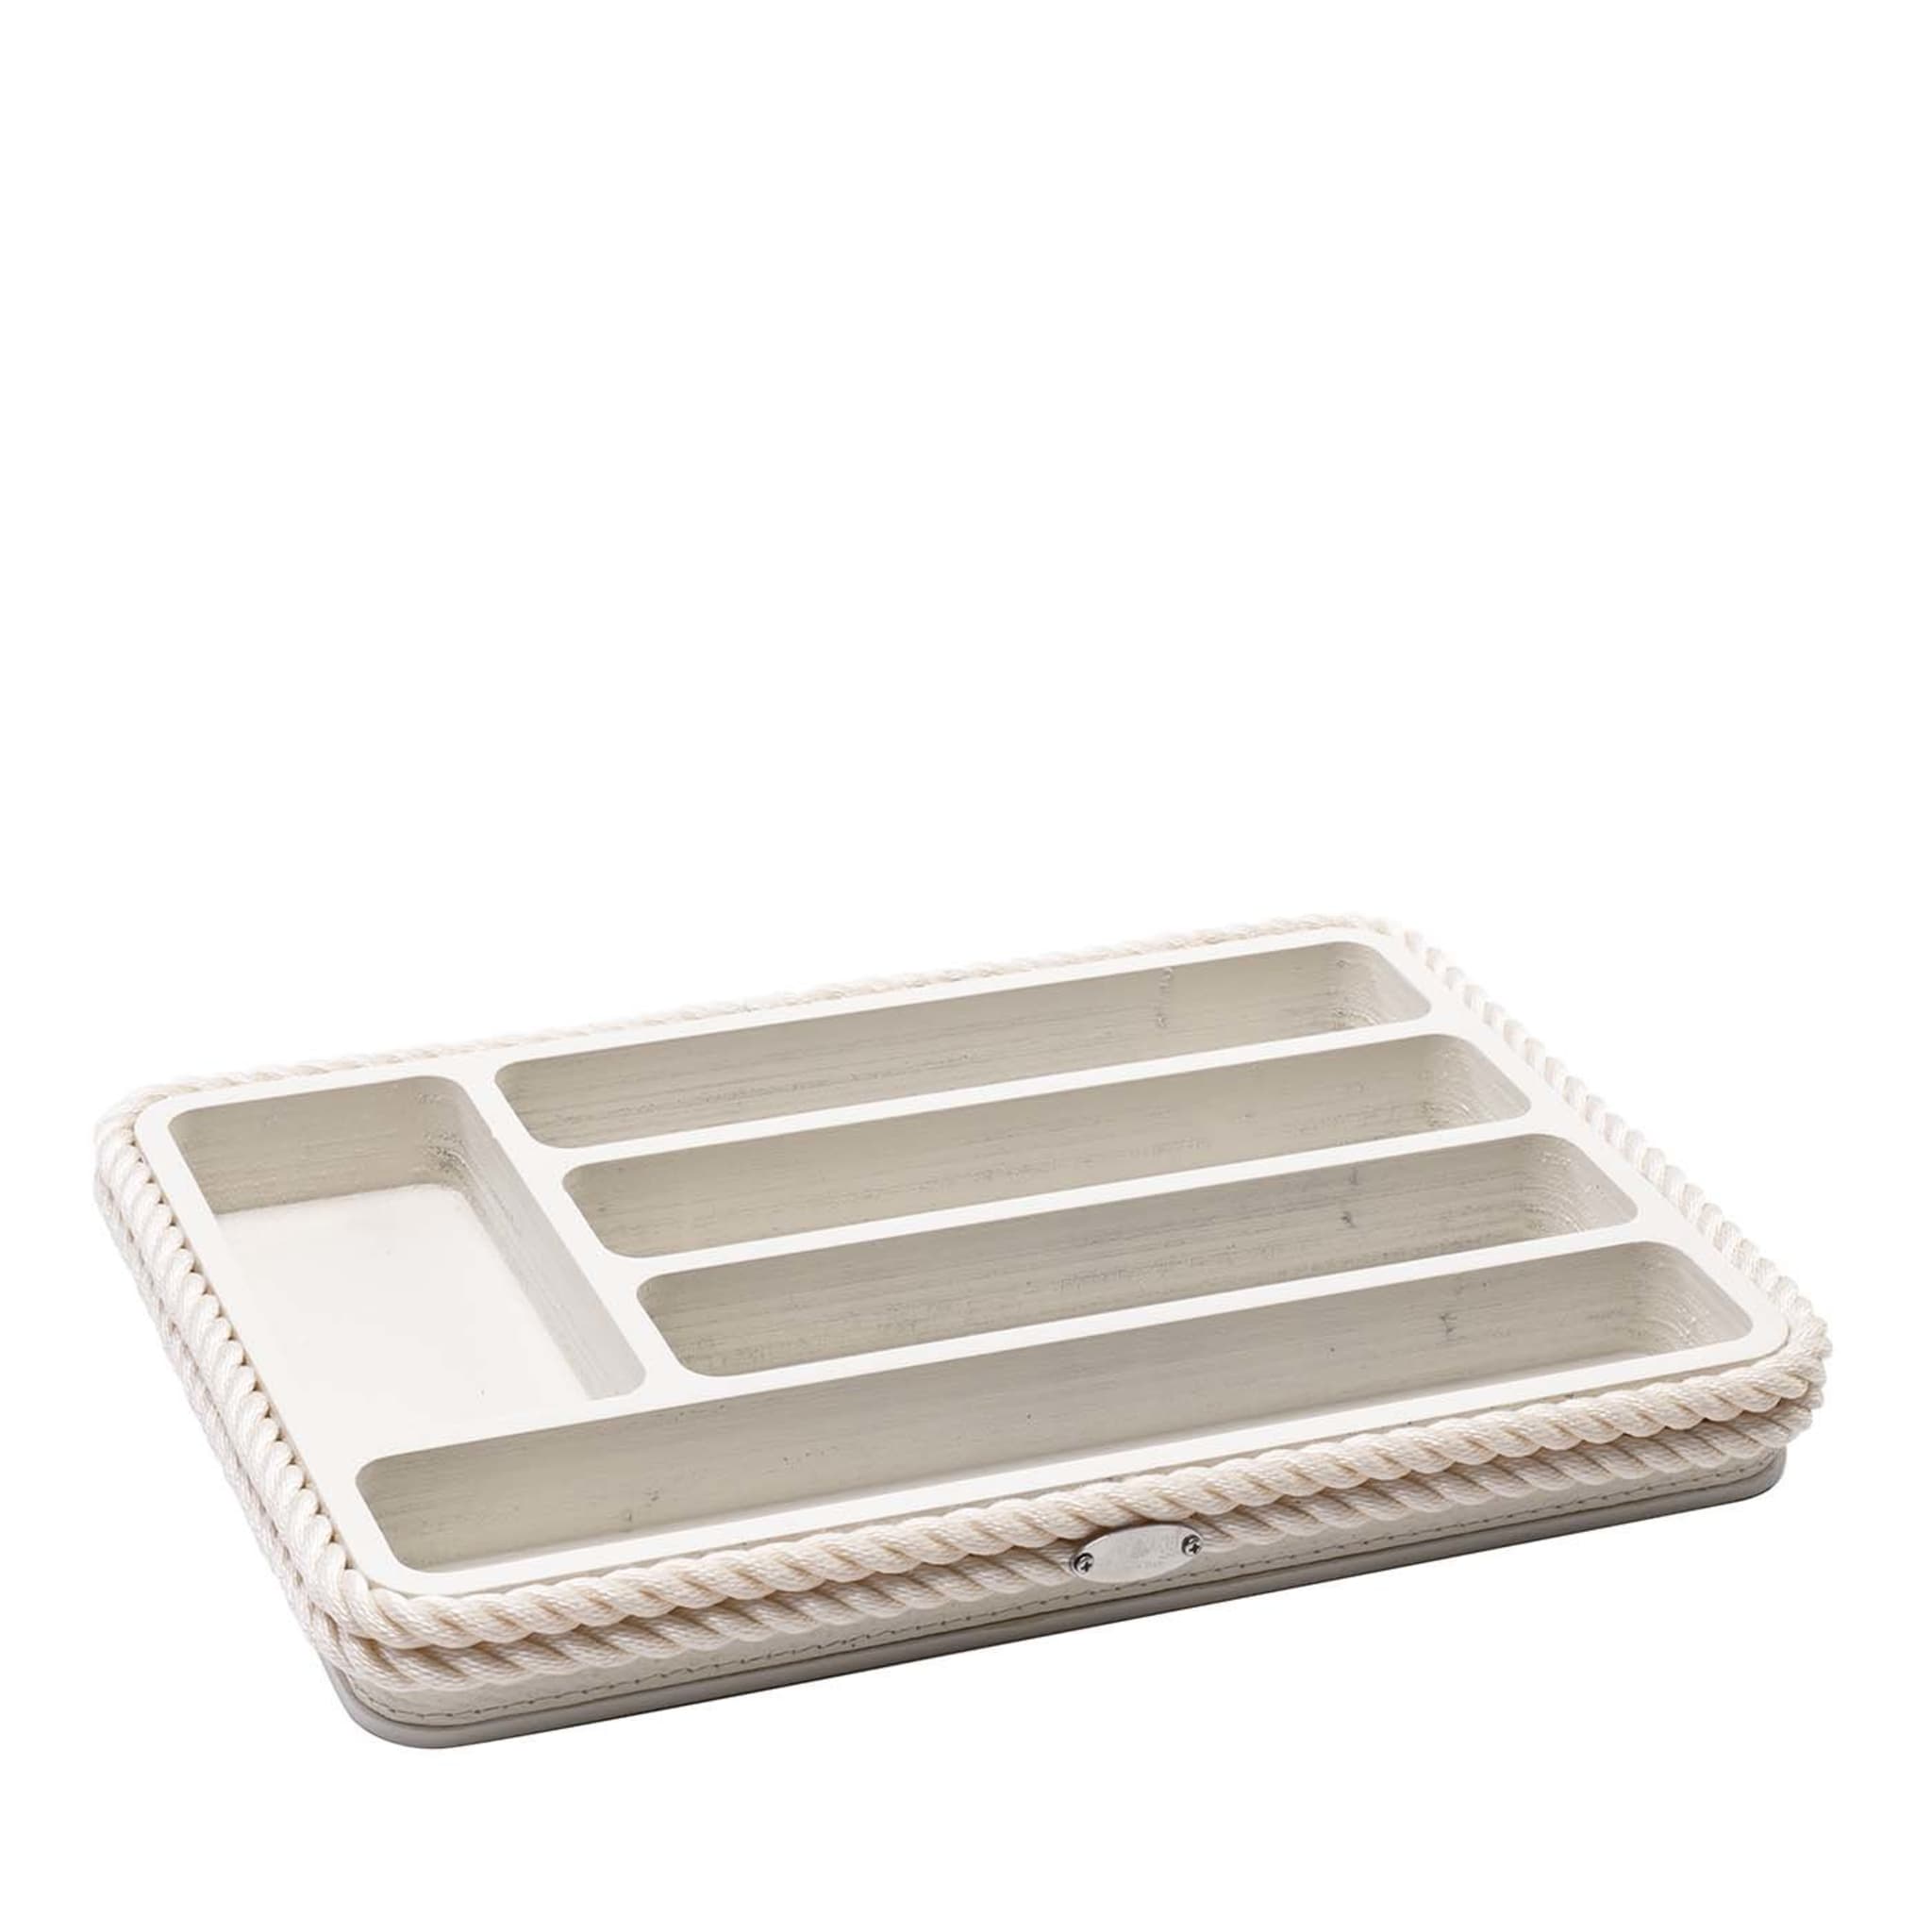 Cream Flatware Holder/Tray - Main view